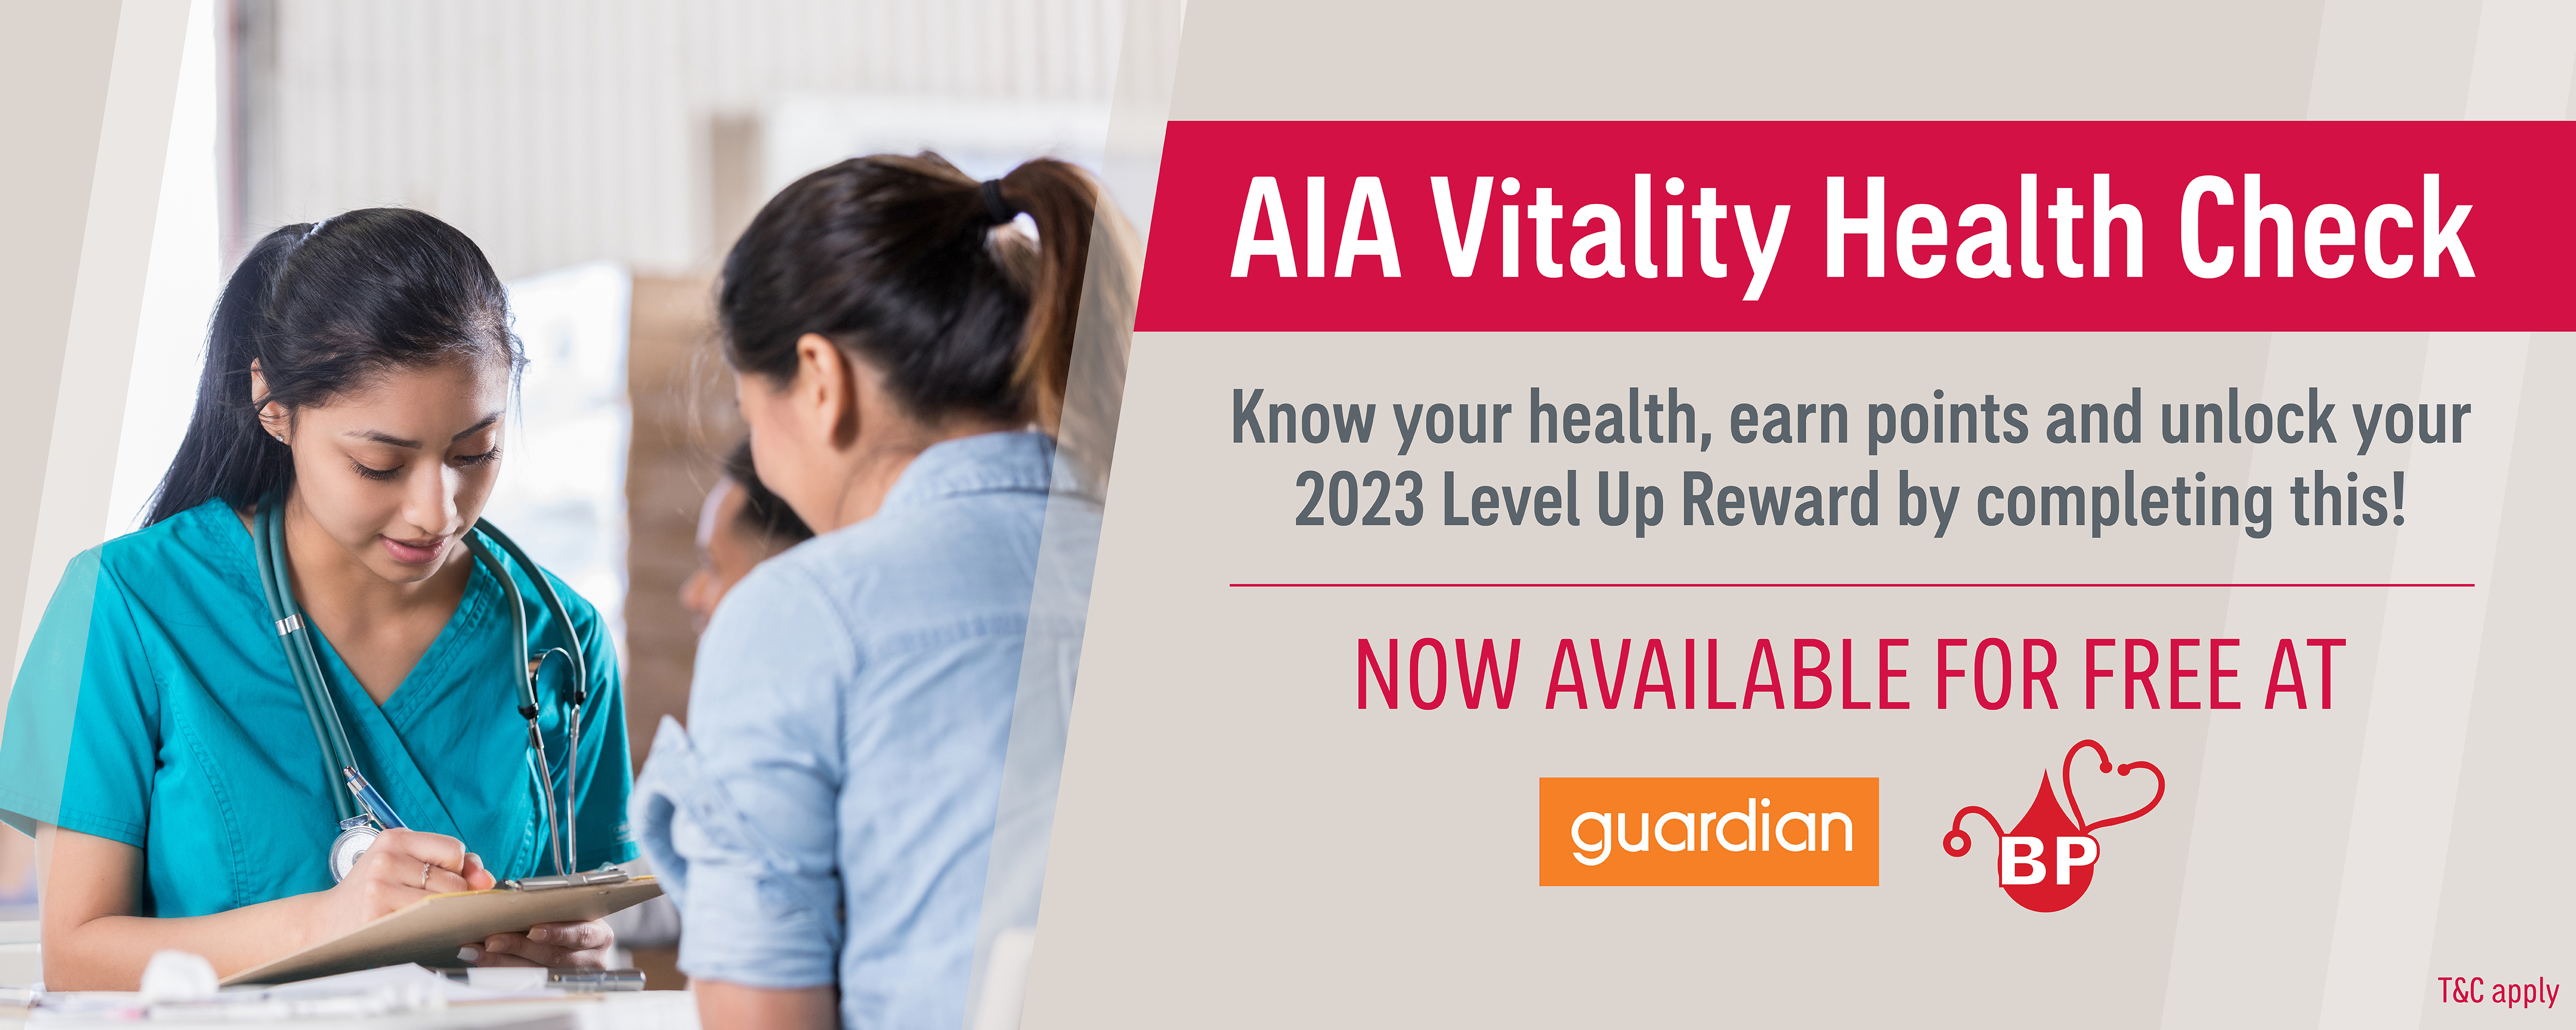 AIA Vitality Health Check